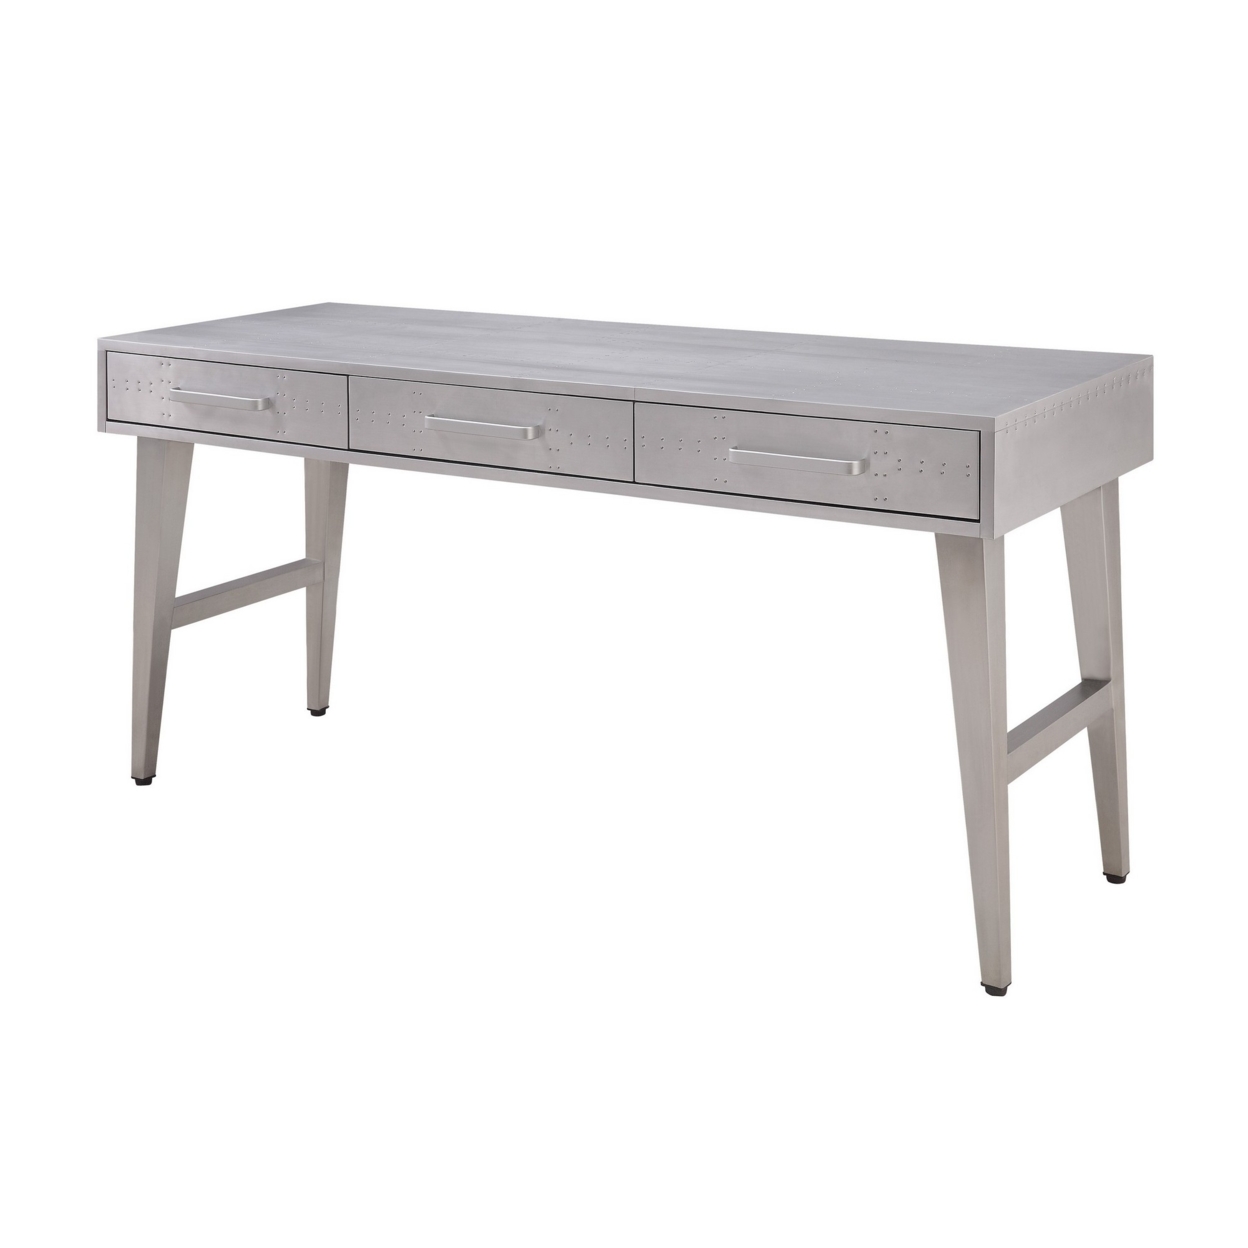 3 Drawer Metal And Wood Rectangular Desk With Aluminum Patchwork, Silver- Saltoro Sherpi